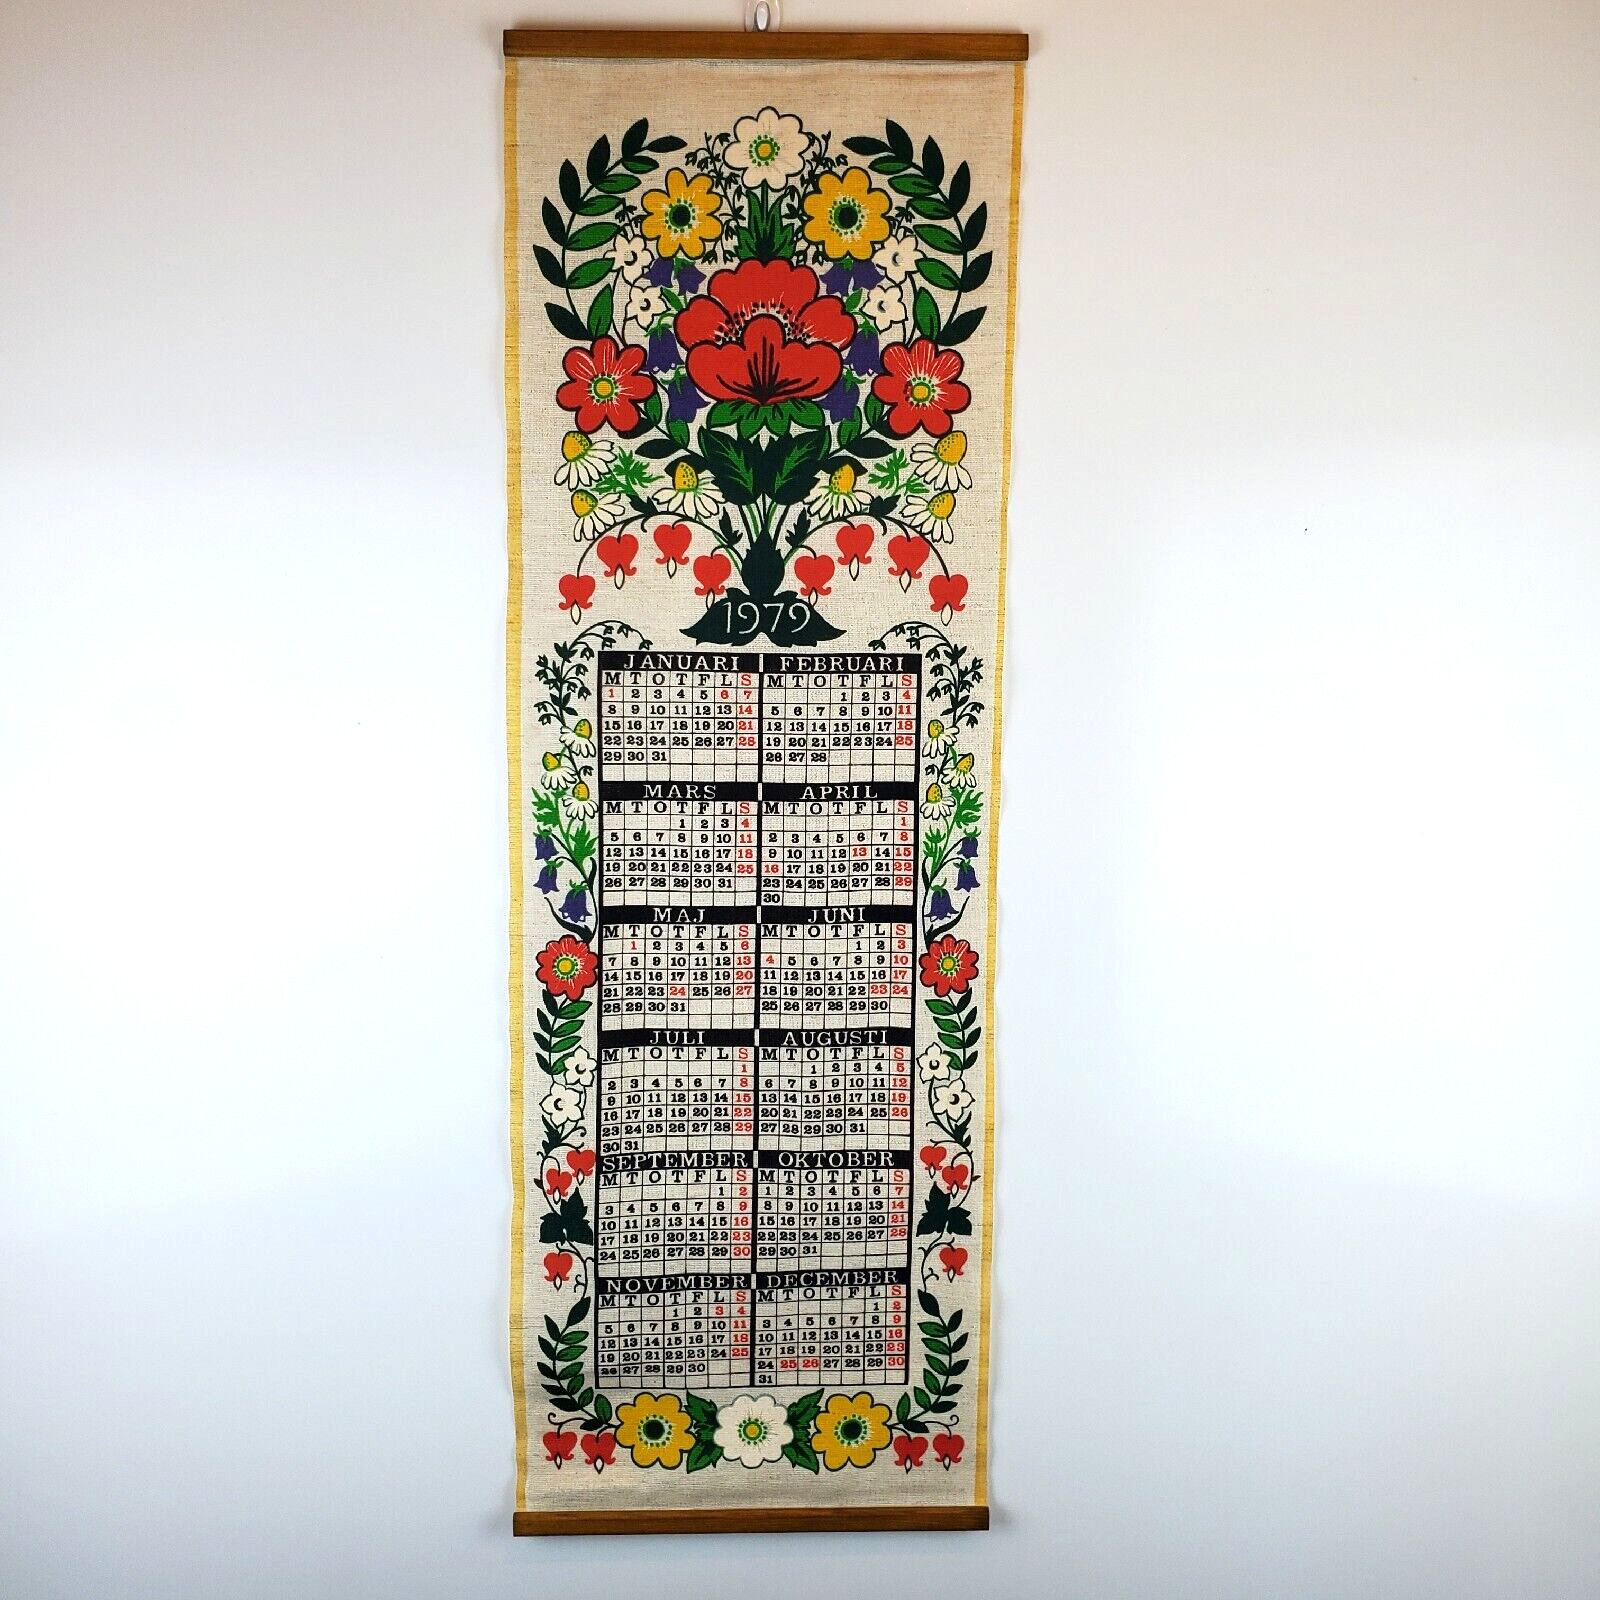 Vintage Swedish Calendar Almedahls 1979 Linen w/ Wood Wall Hanging Flowers